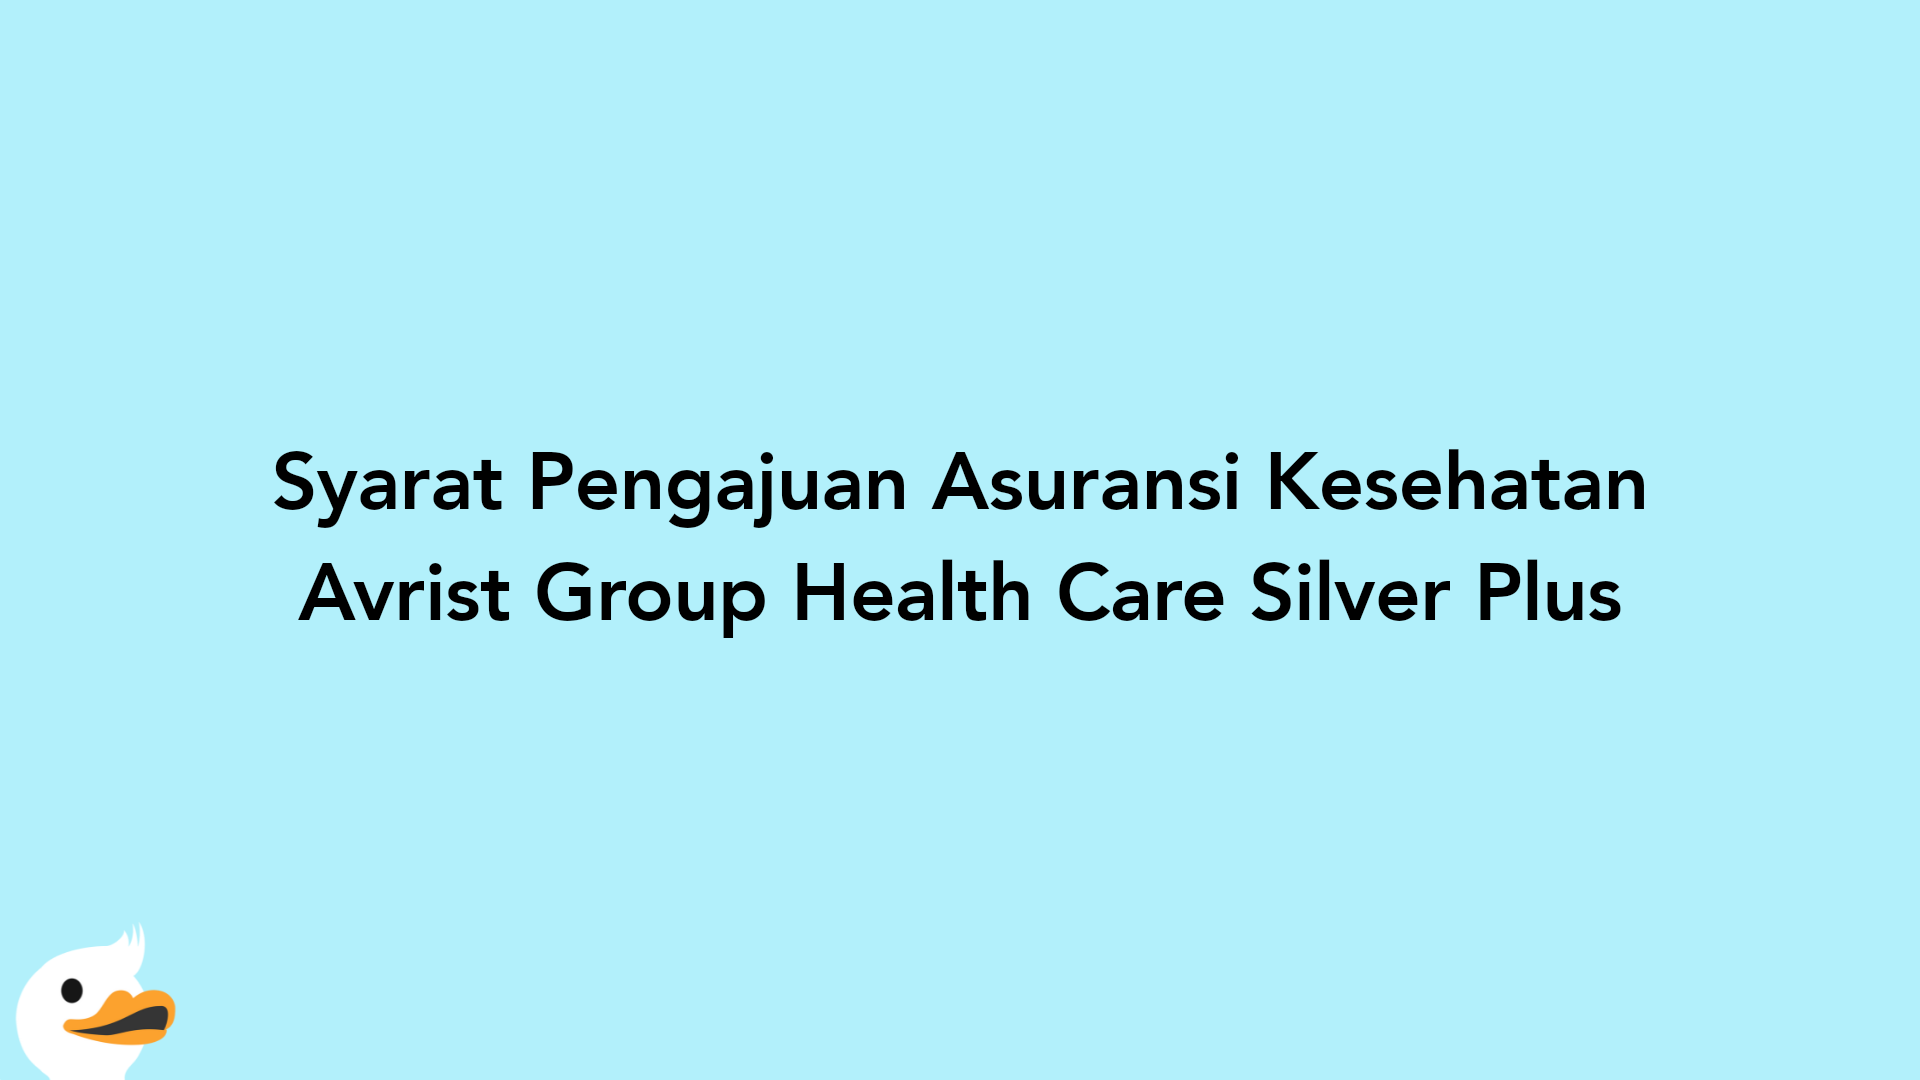 Syarat Pengajuan Asuransi Kesehatan Avrist Group Health Care Silver Plus